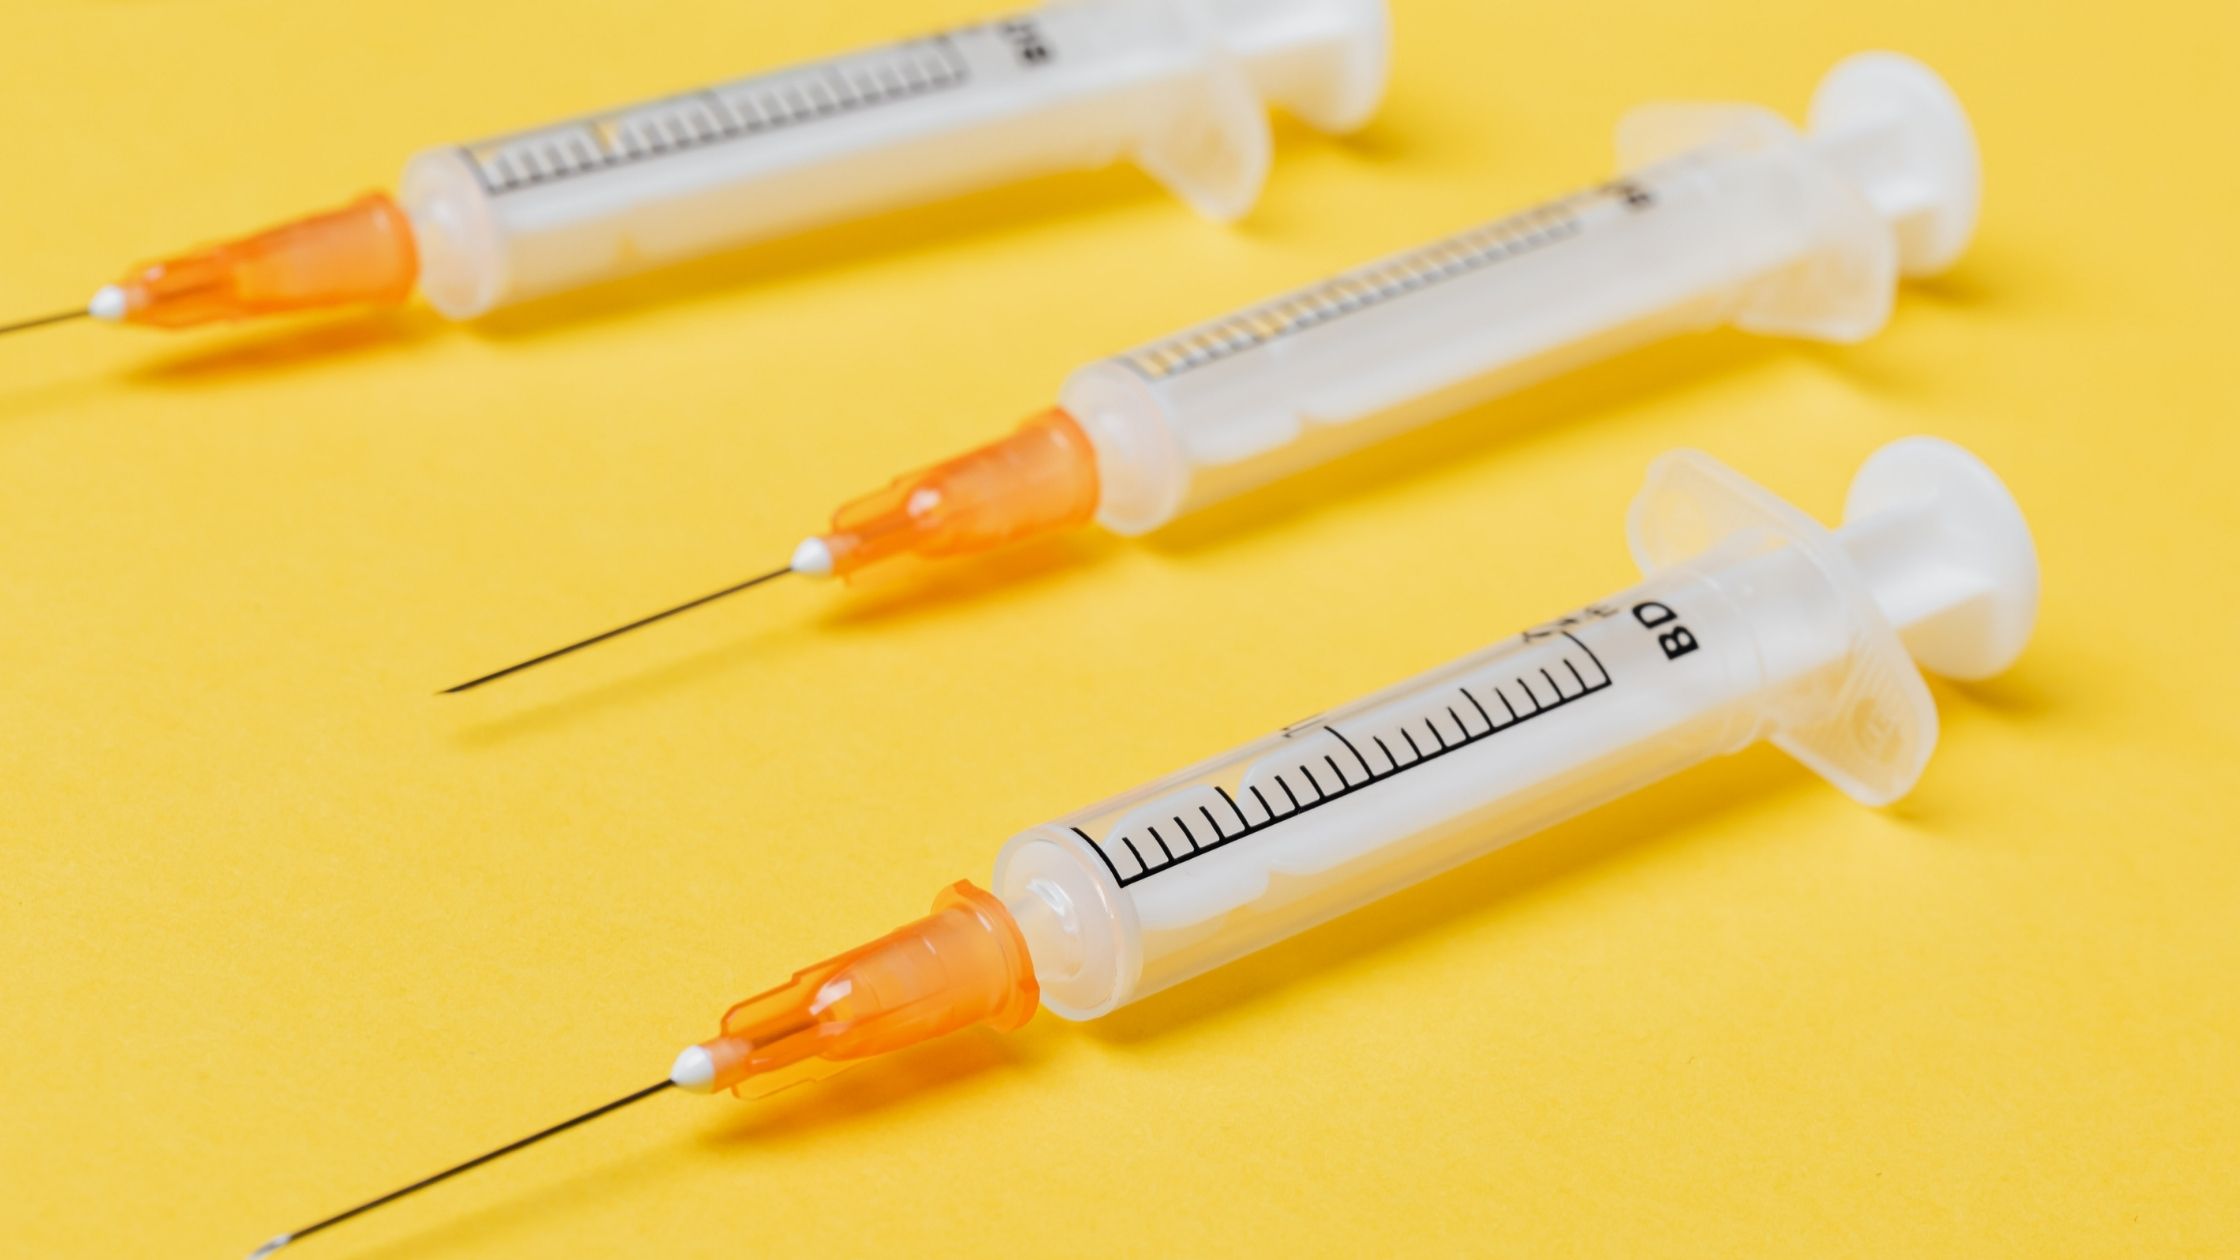 Prefilled Syringe Training Devices